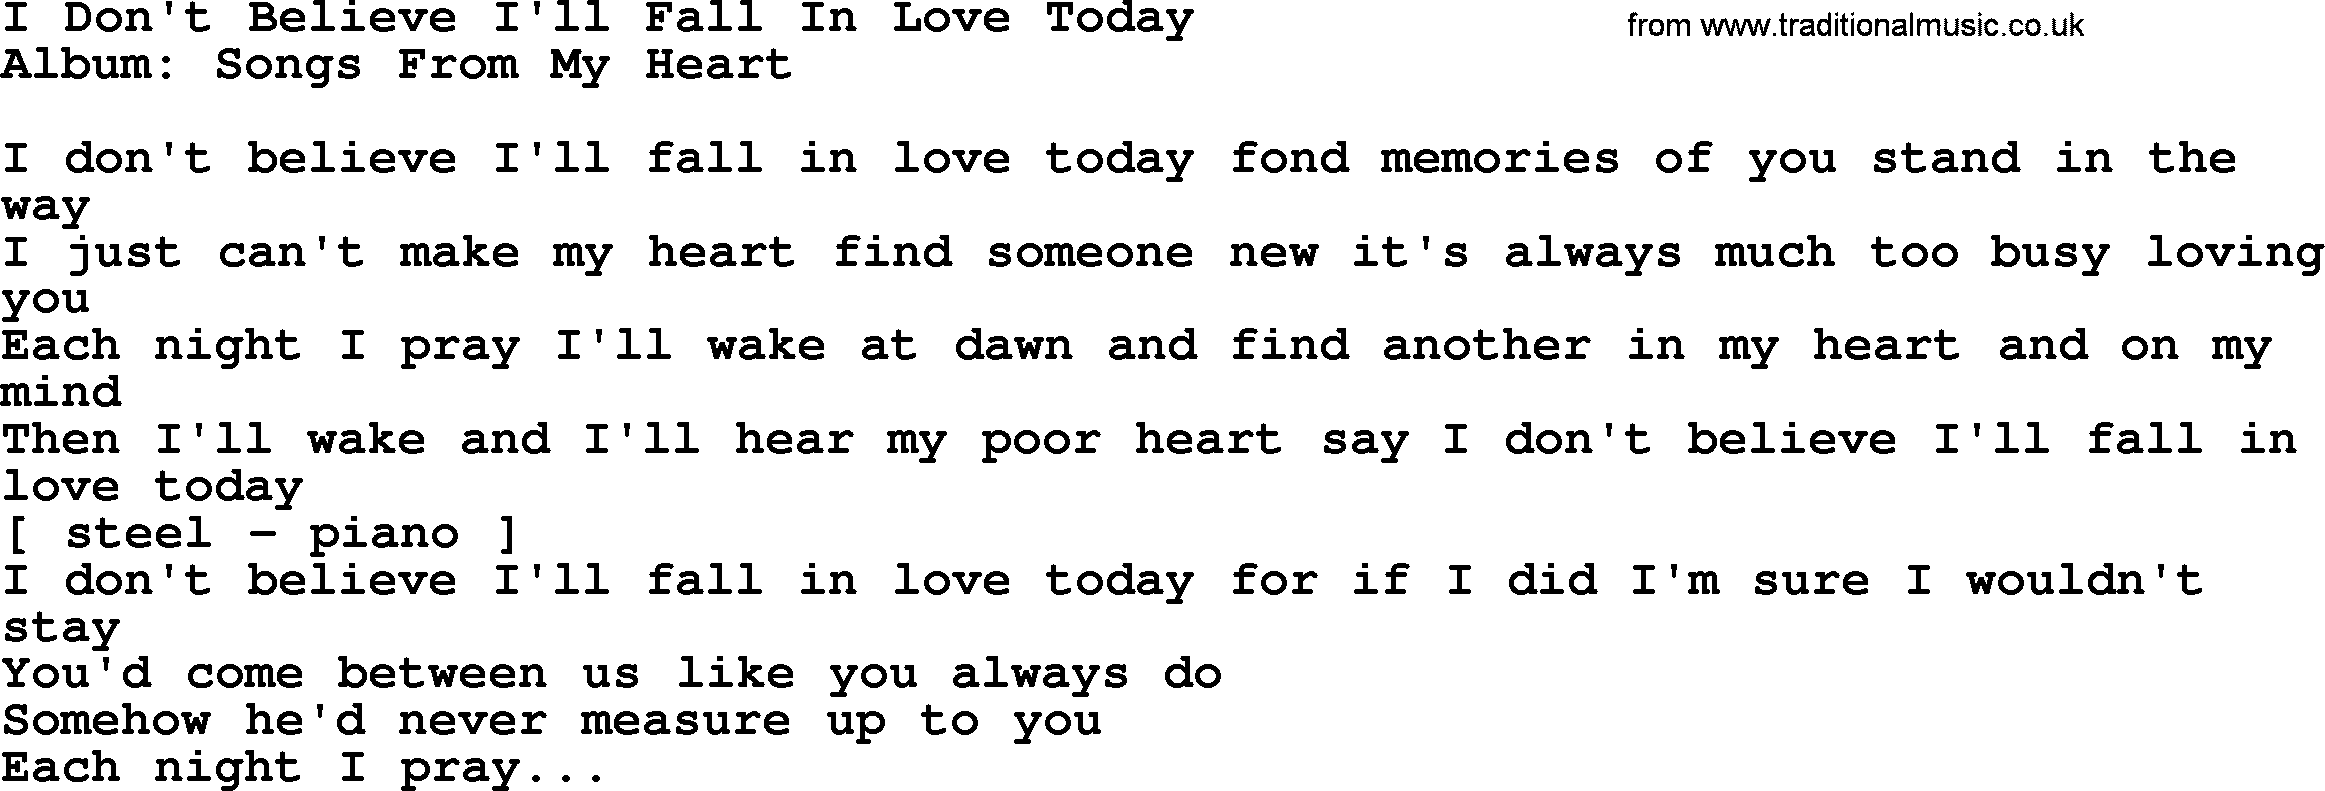 Loretta Lynn song: I Don't Believe I'll Fall In Love Today lyrics